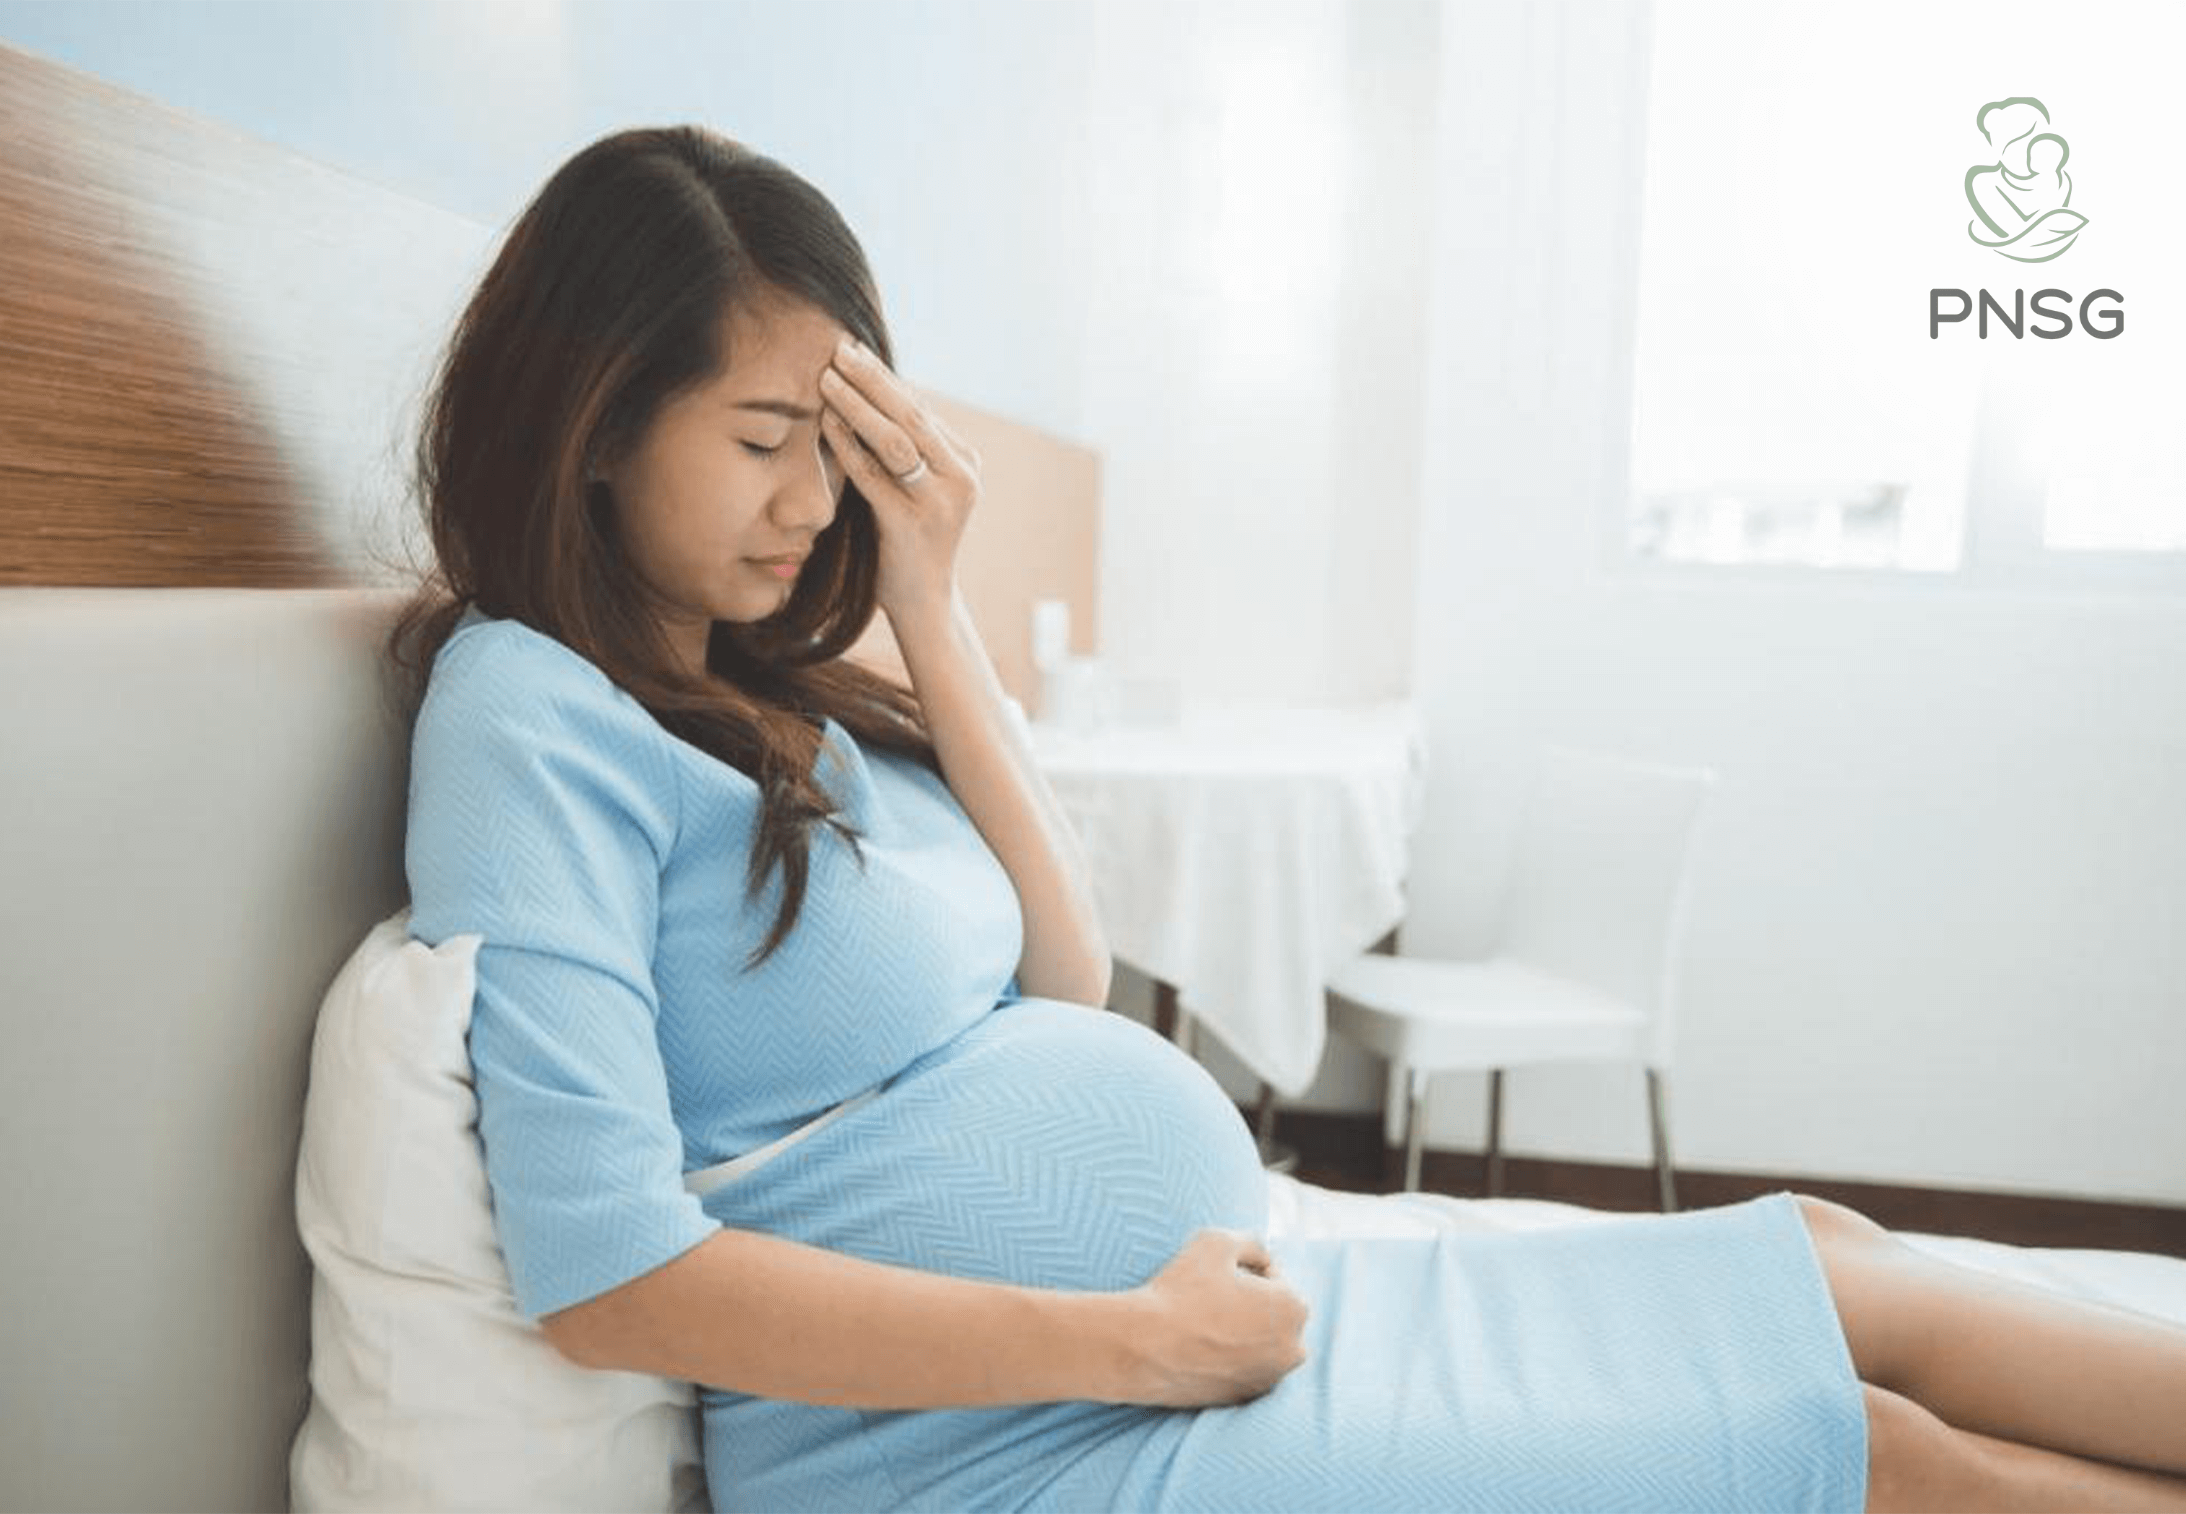 Uterine Prolapse During Pregnancy: Risks, Symptoms & Care